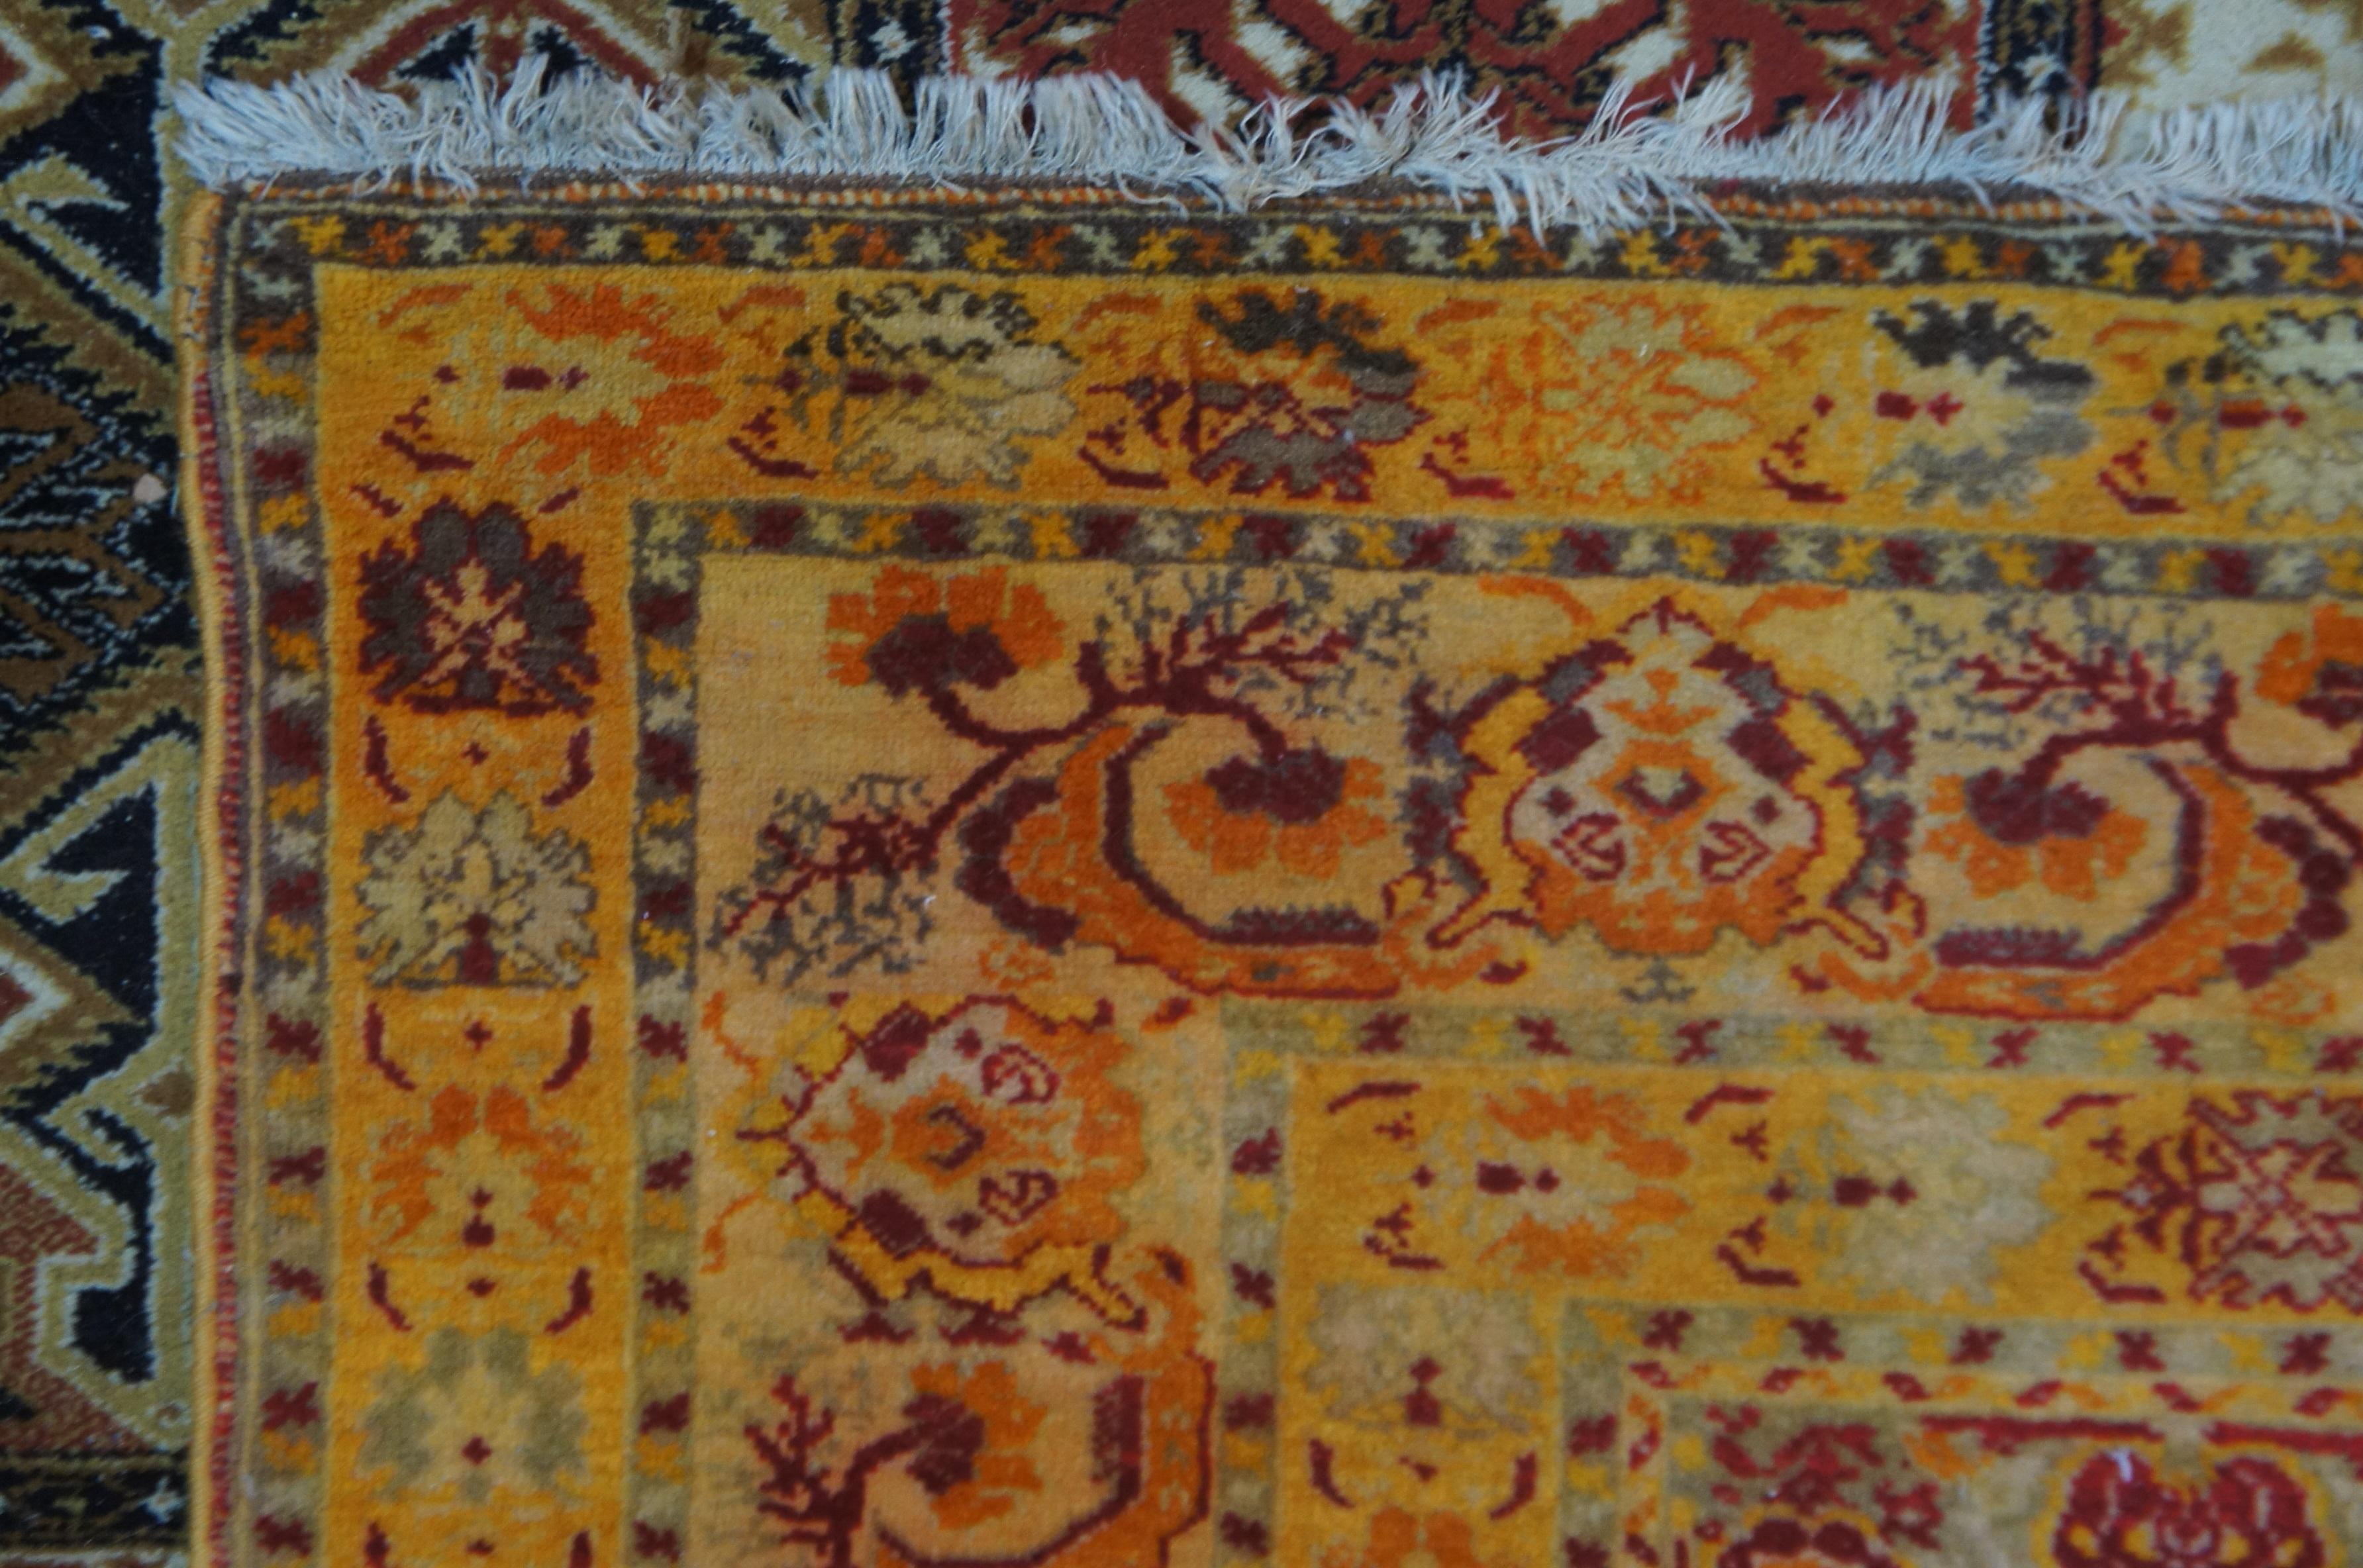 Antique Handmade Wool Geometric Orange Red Turkish Prayer Rug Mat Carpet 6’ x 4’ 6